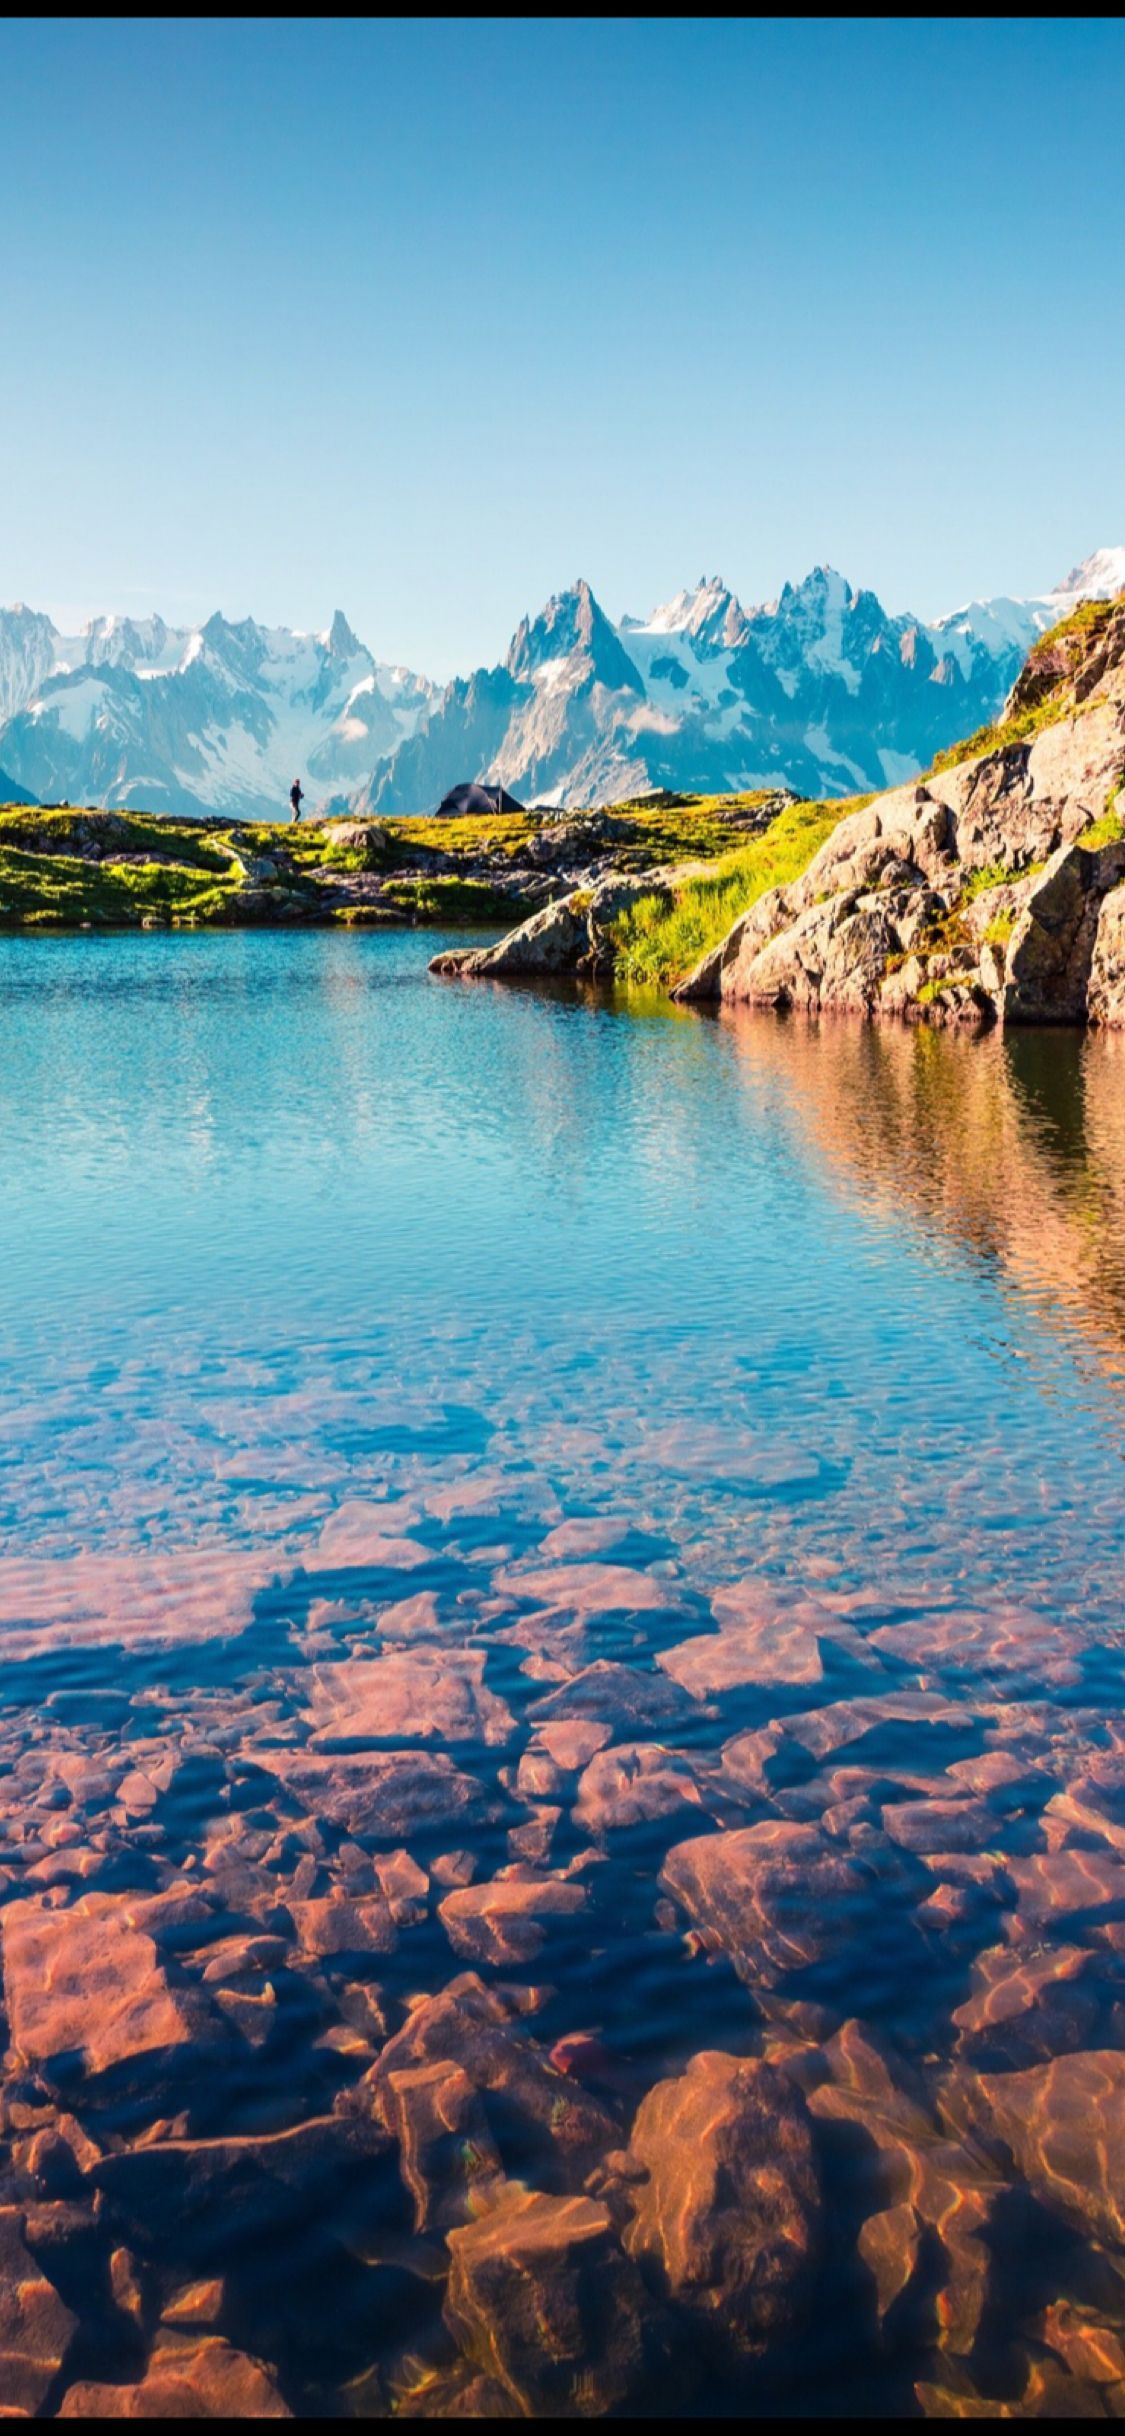 The mountainous lake of peace. Nature wallpaper, Summer wallpaper